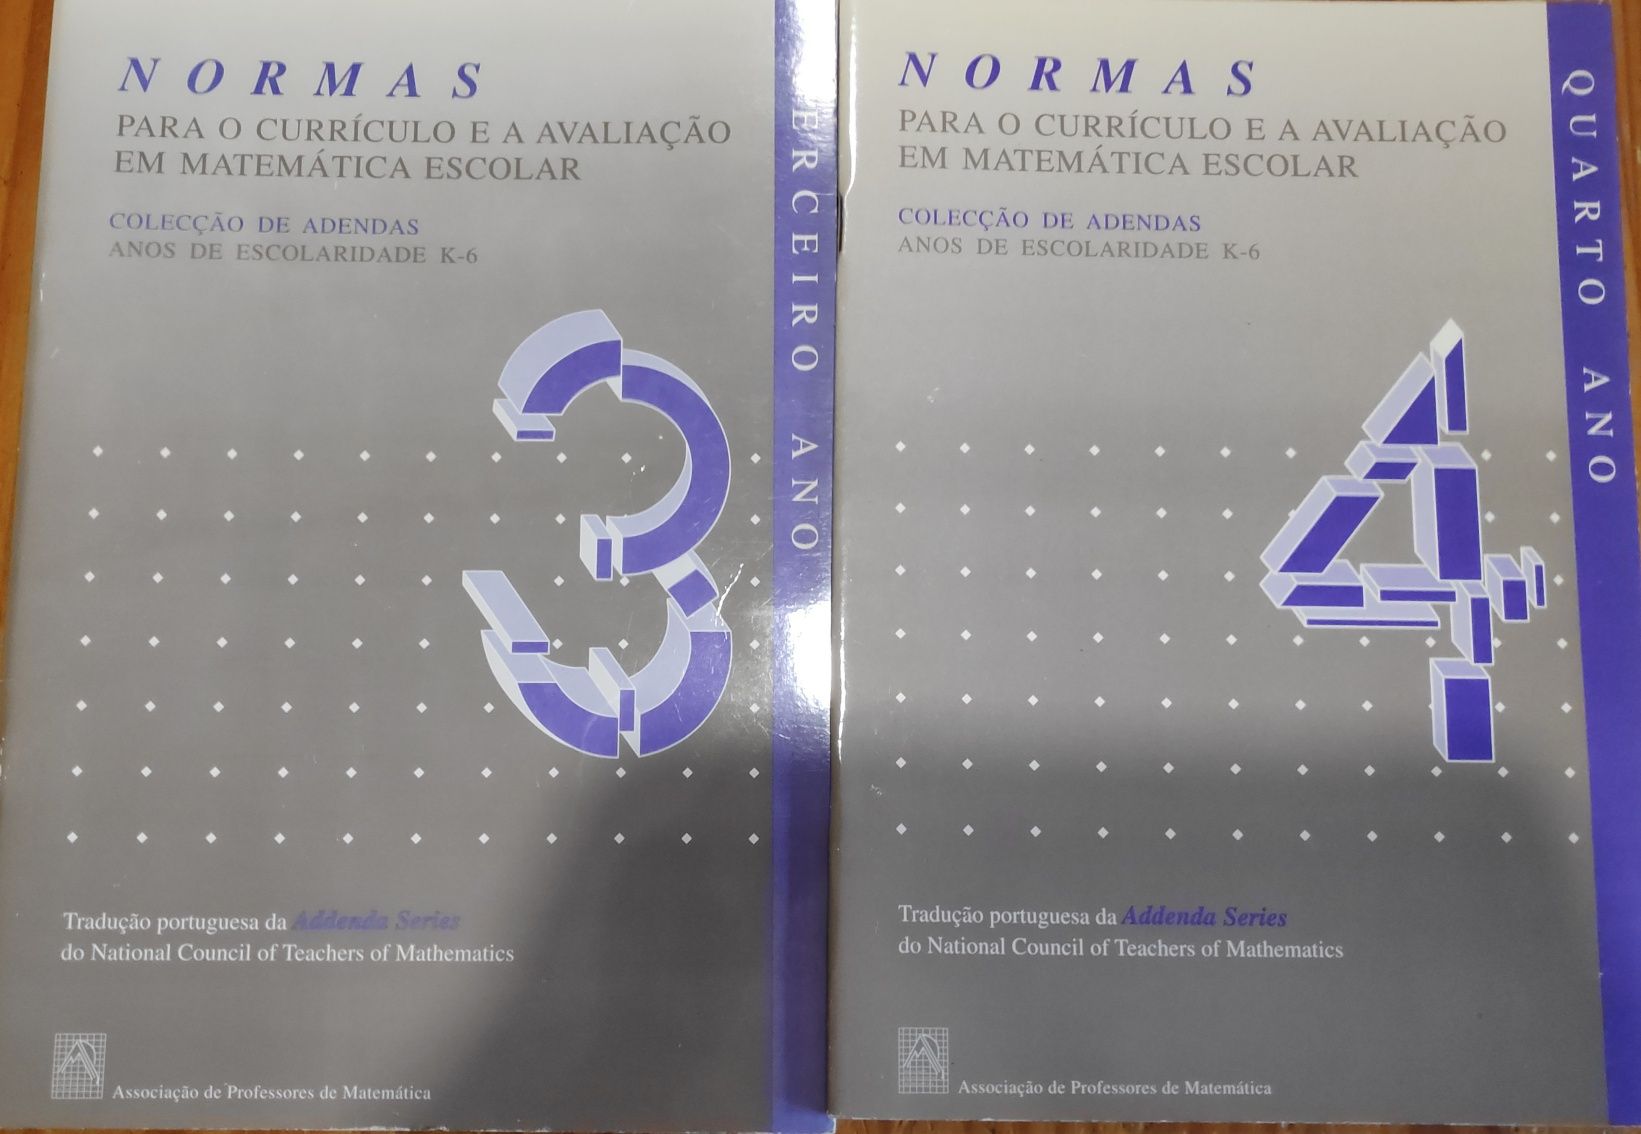 Normas do National Council of Teachers of Mathematics